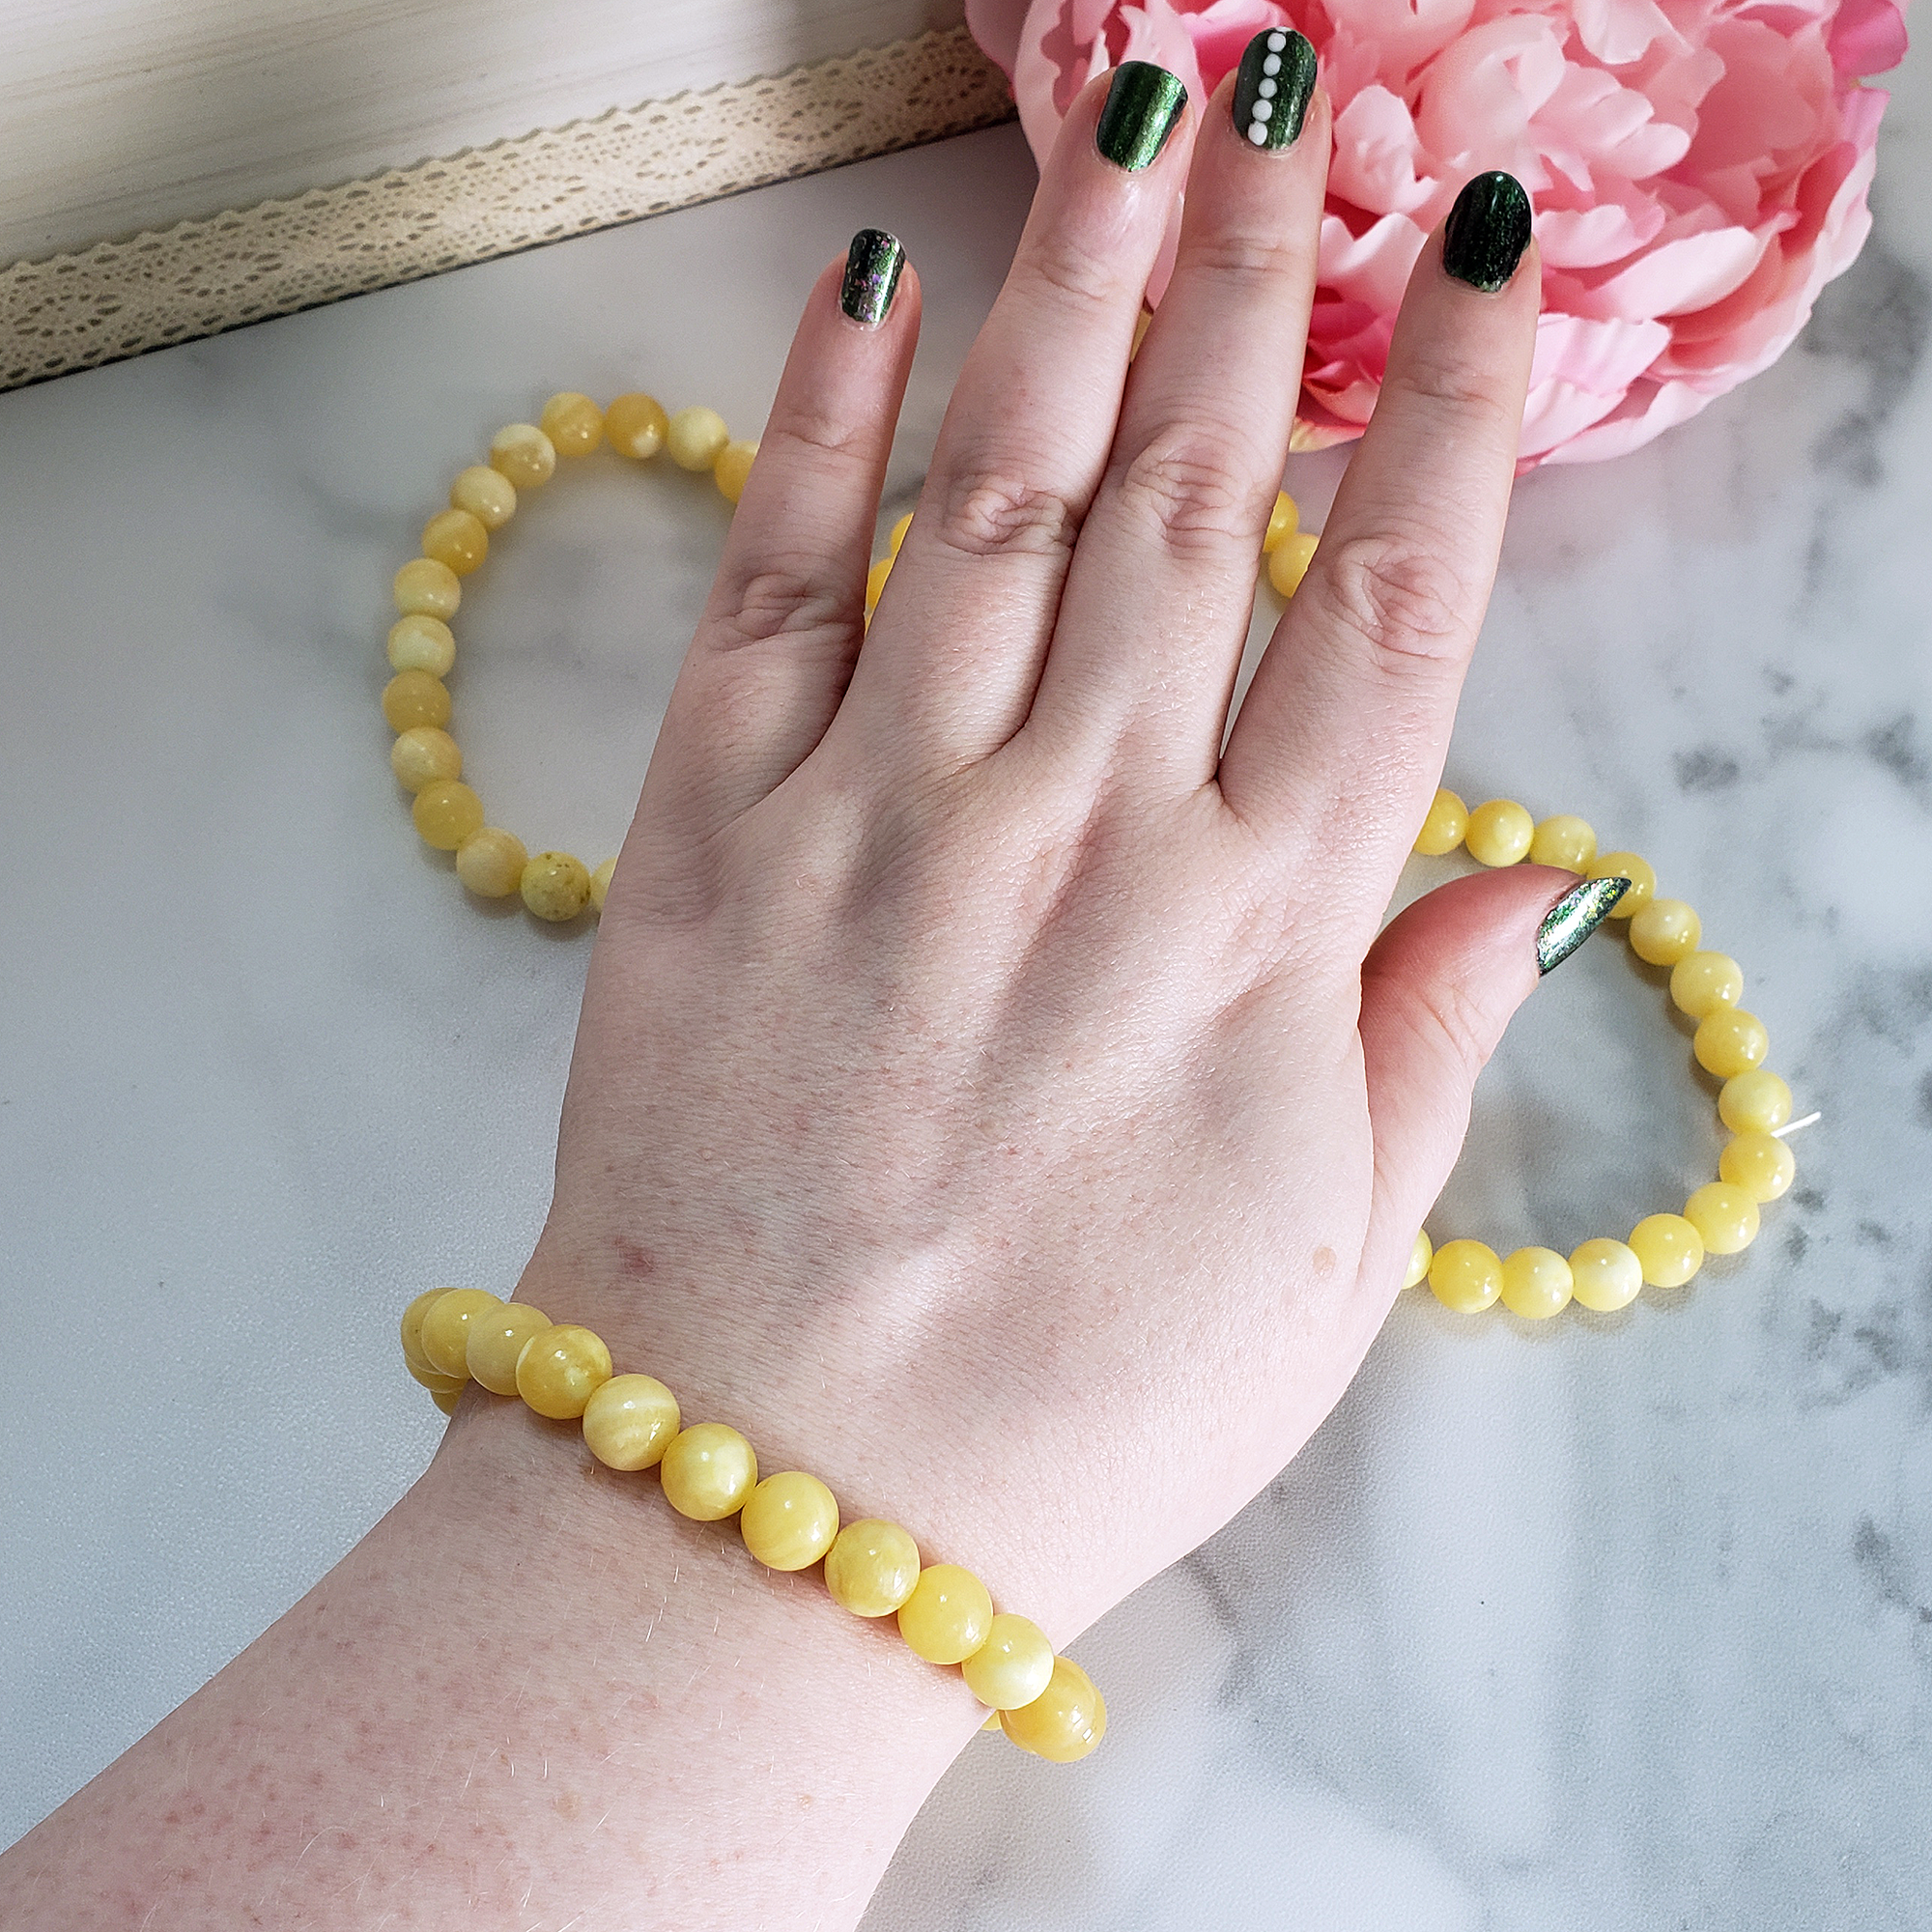 Yellow Calcite Gemstone 8mm Bead Bracelet - On Wrist Above More Bracelets